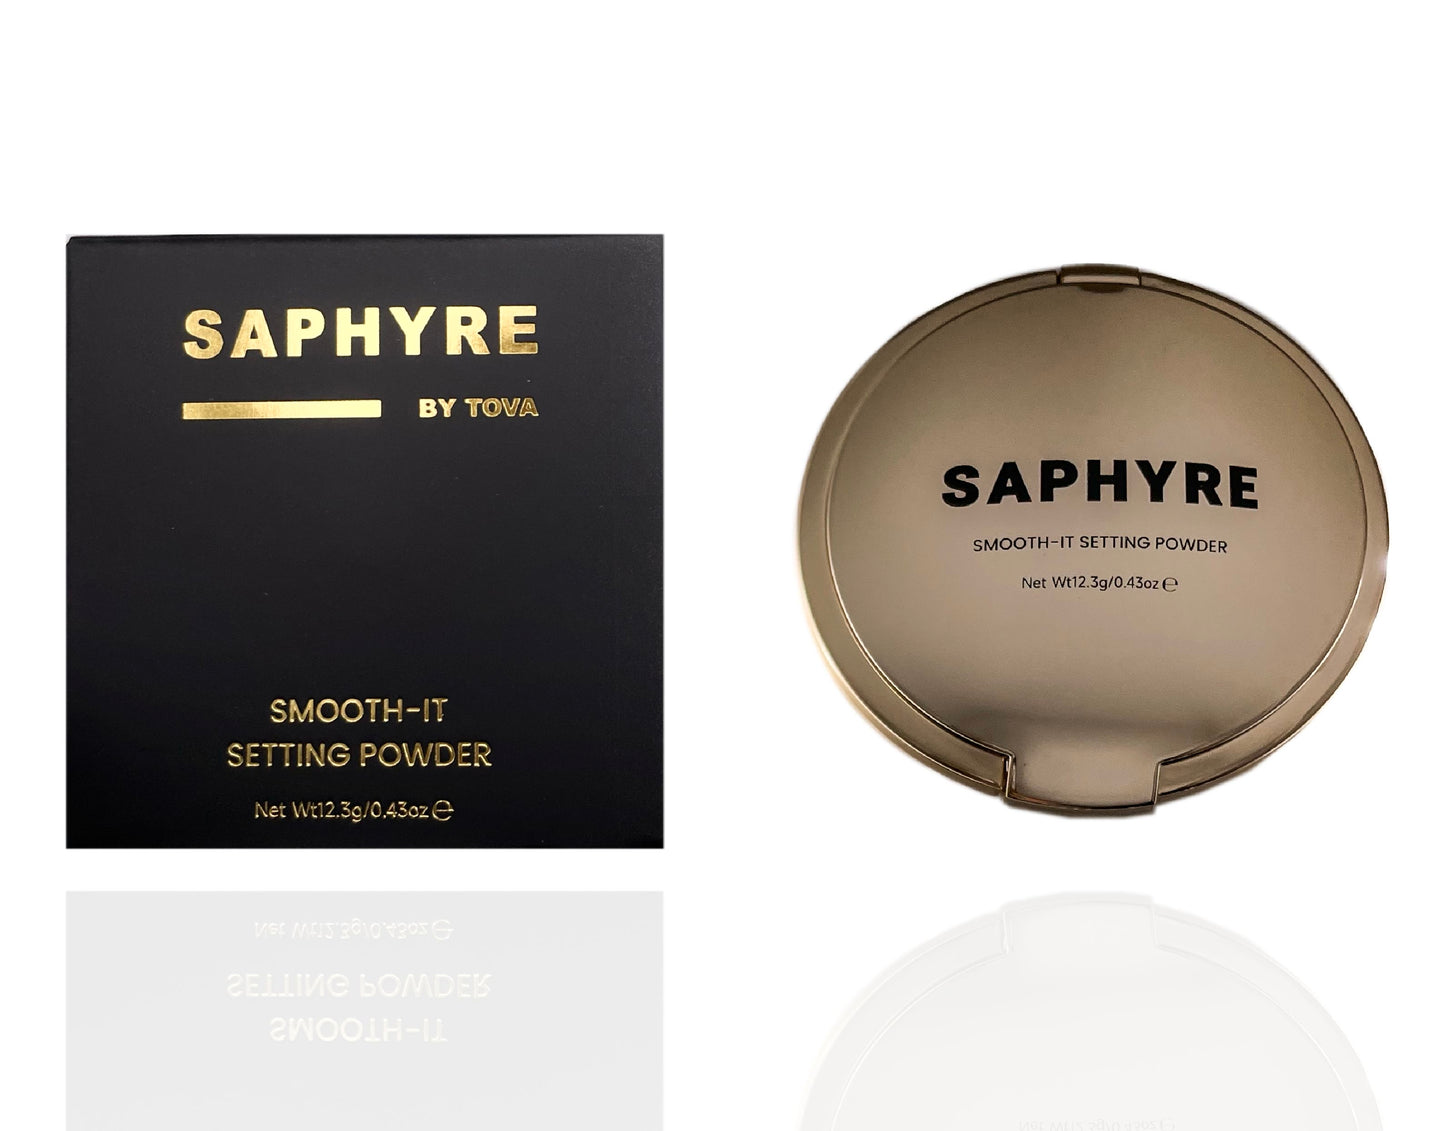 Saphyre by Tova Smooth-it Setting Powder